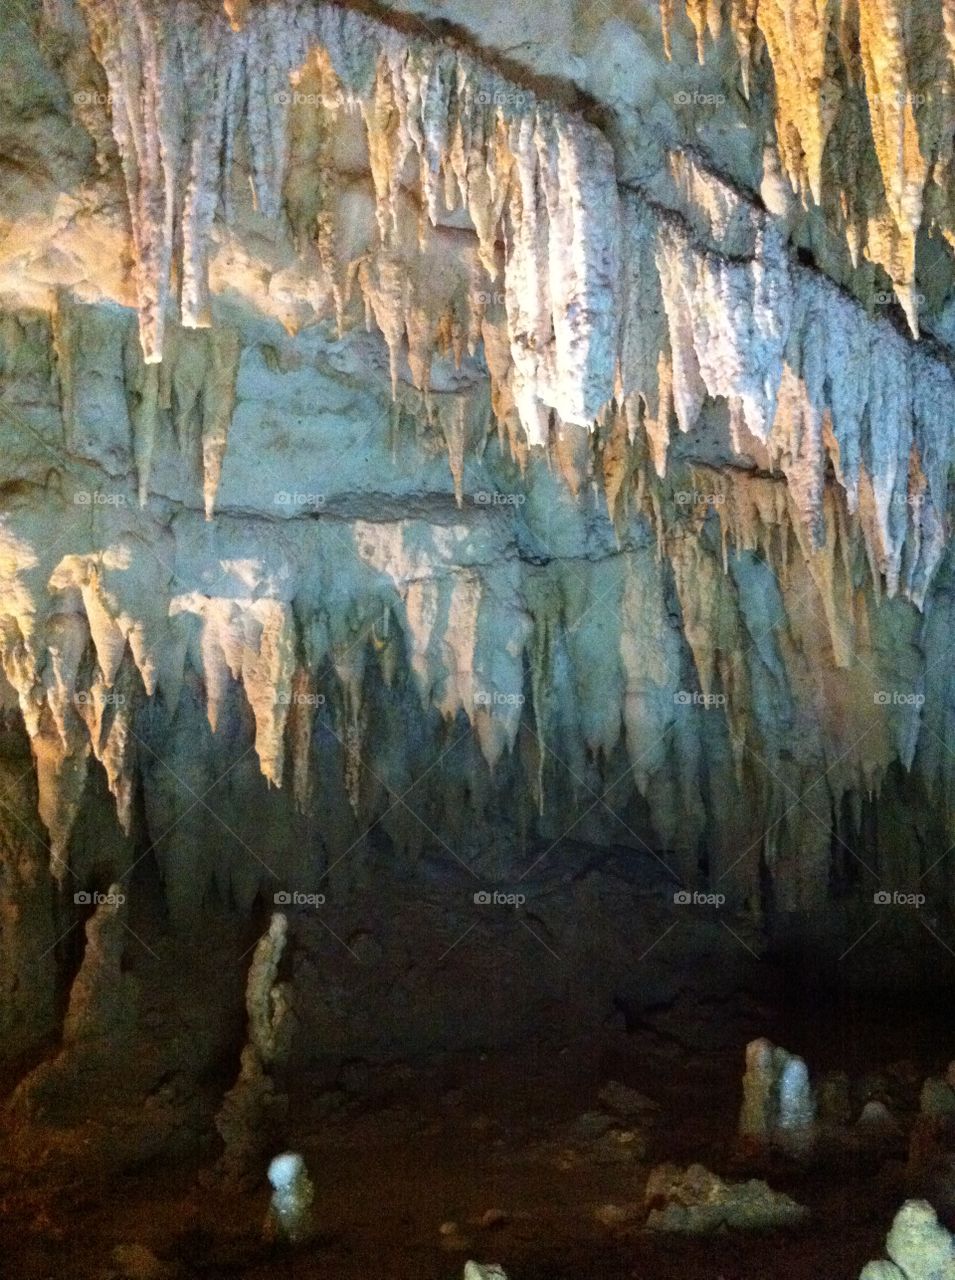 Stalactite, Cave, Subway System, Limestone, Grotto